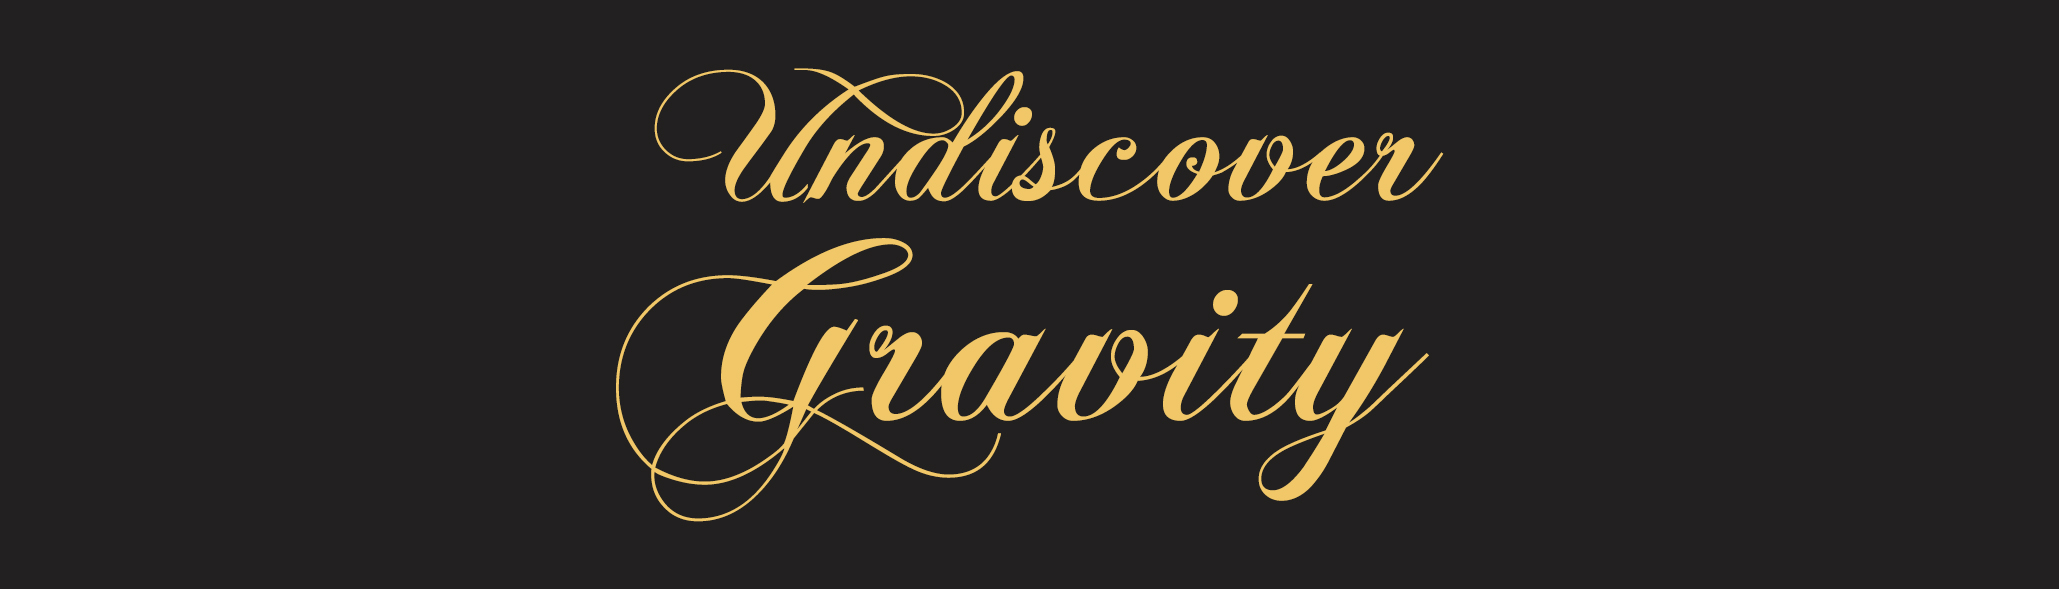 Undiscover Gravity